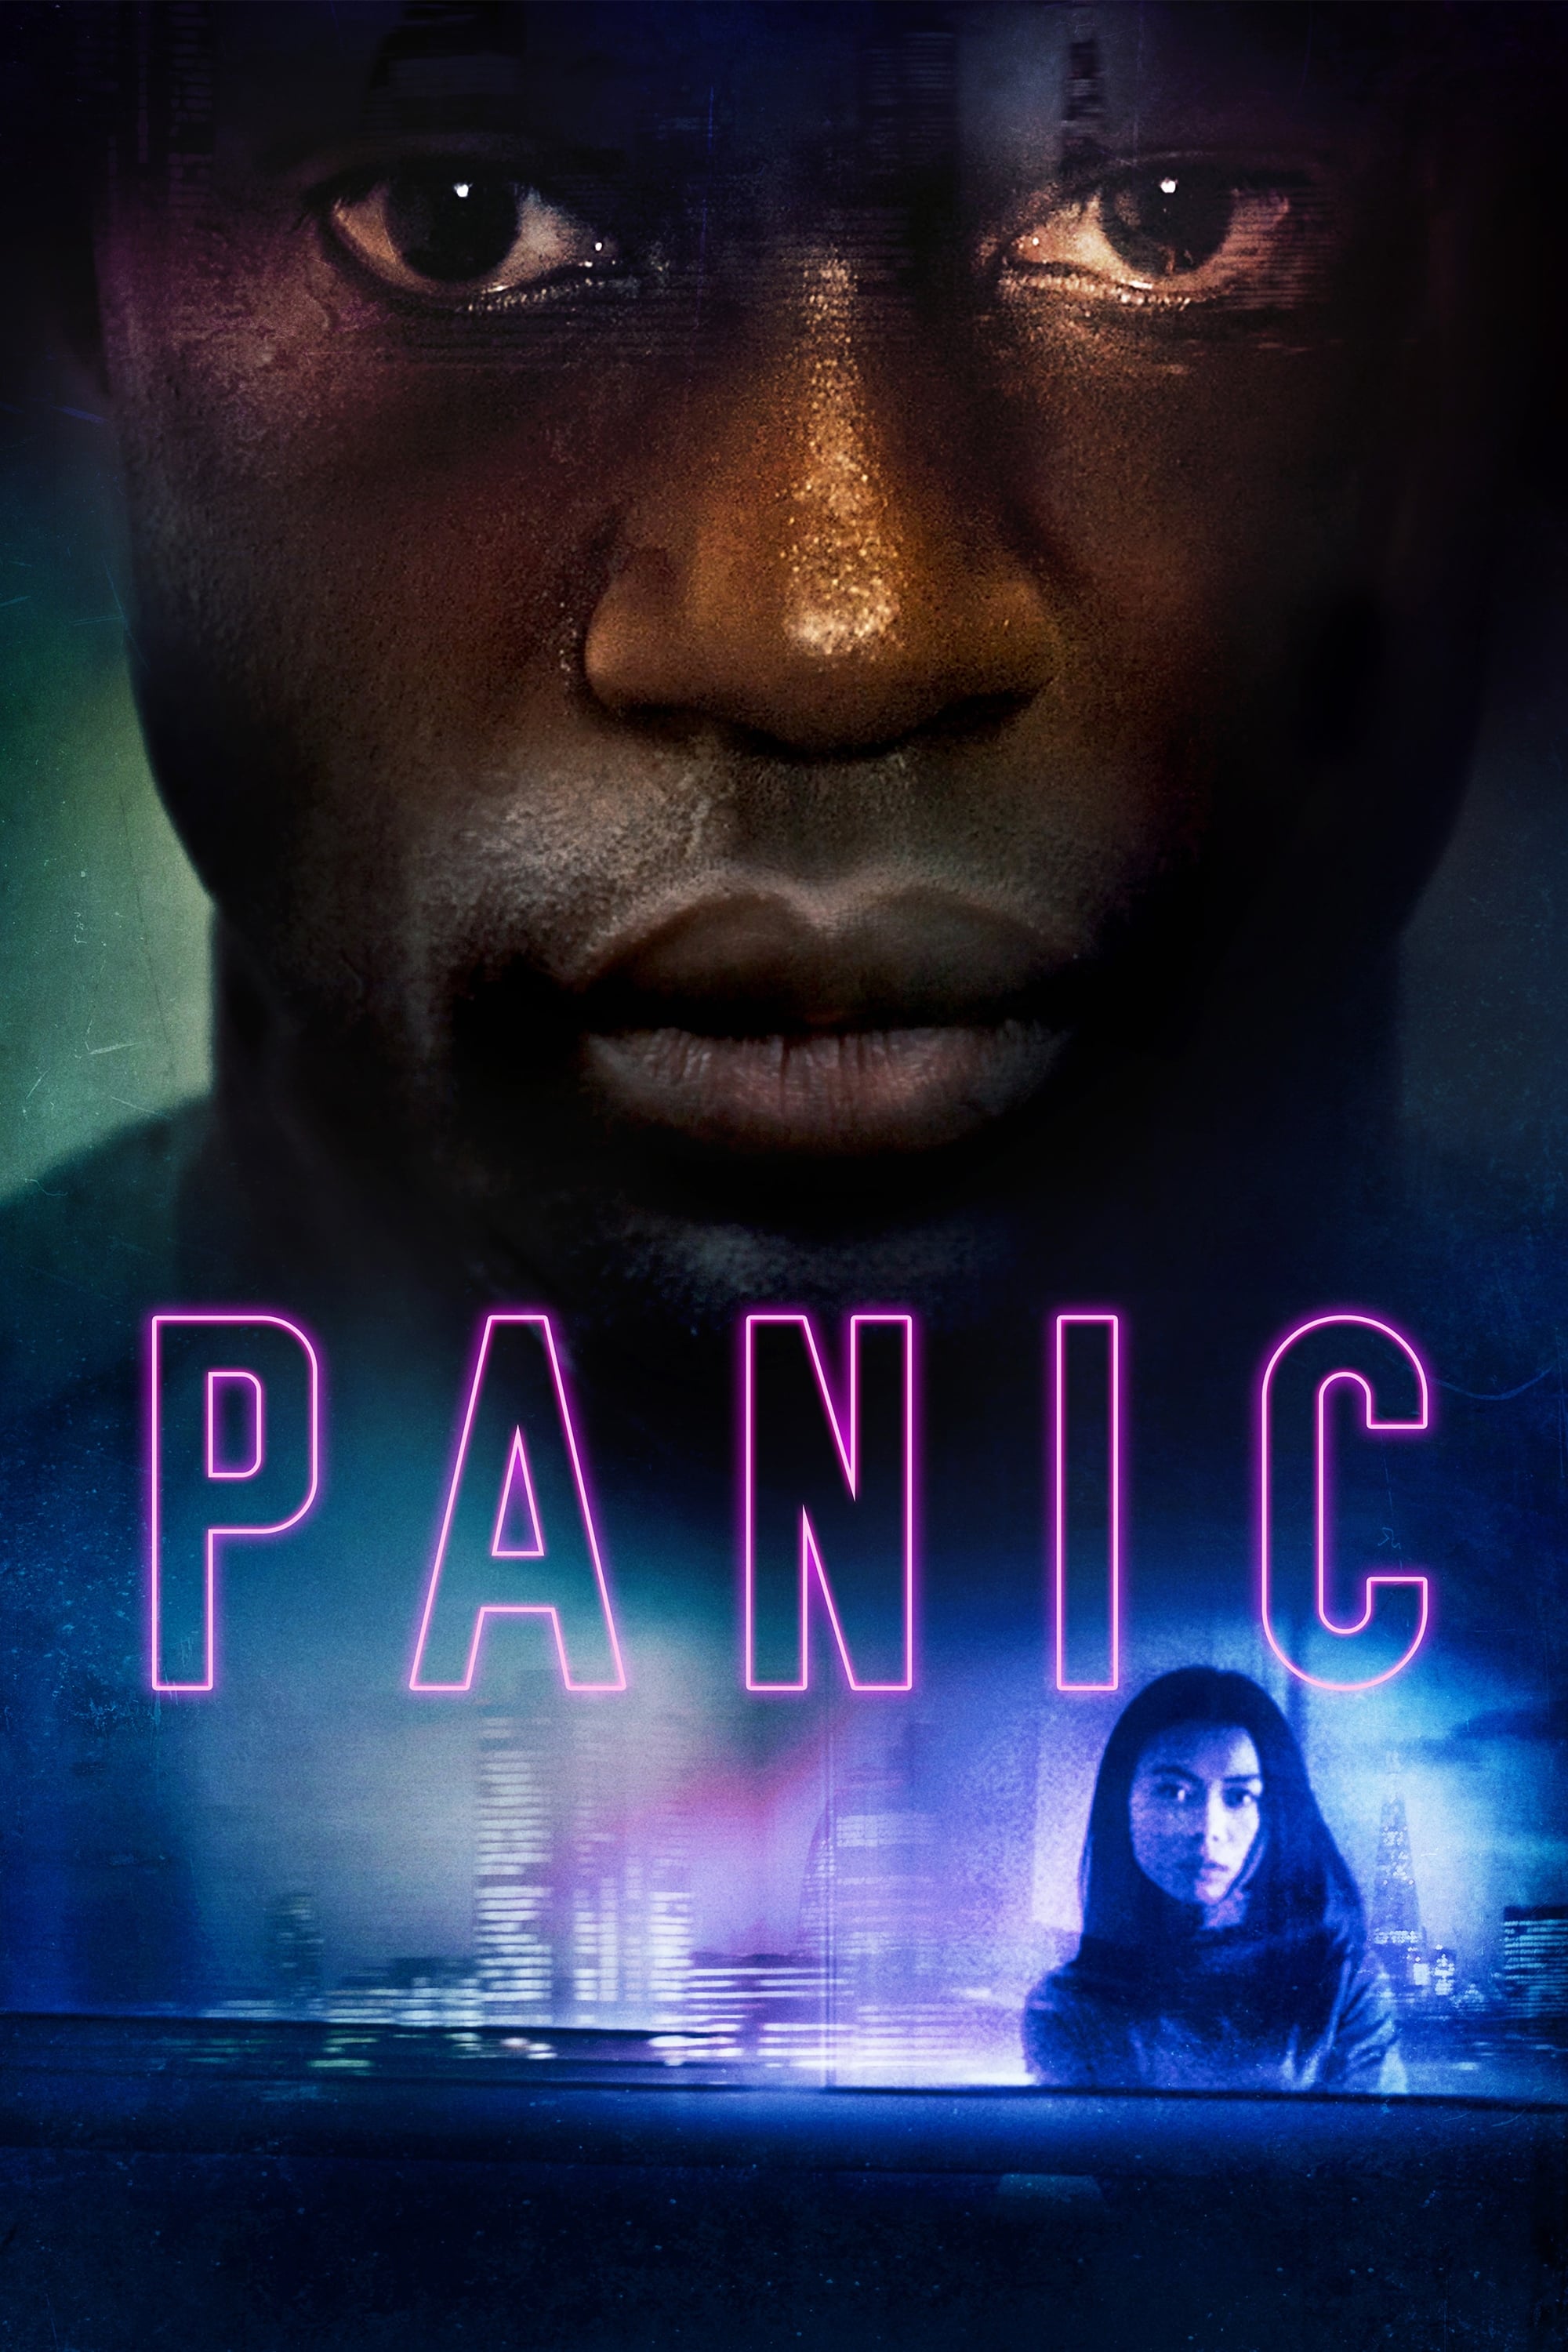 Panic film